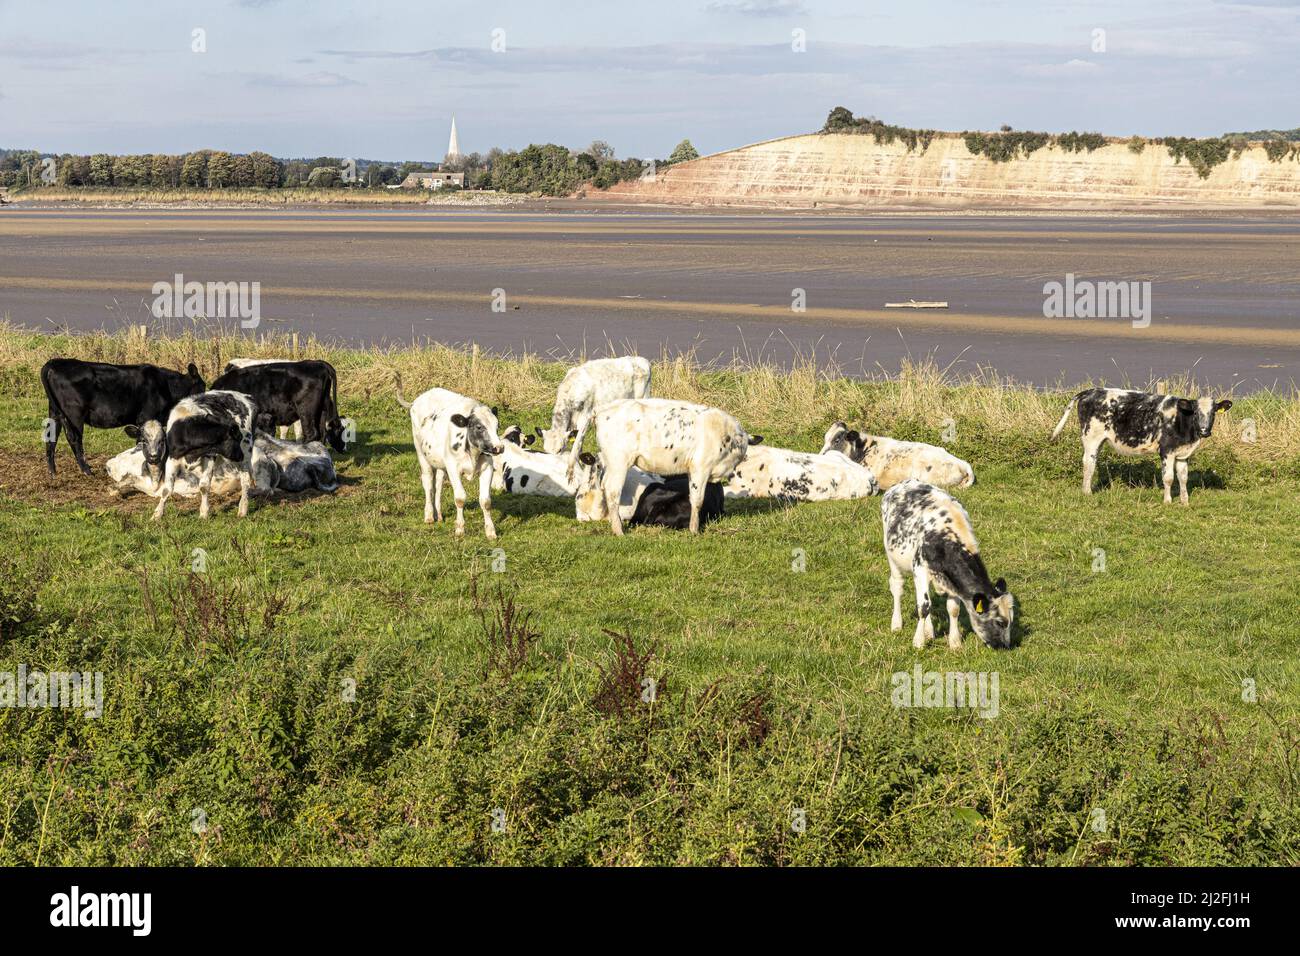 Kühe grasen am Fluss Severn (bei Ebbe) in Arlingham, Gloucestershire, England Großbritannien - Westbury Garden Cliff liegt am anderen Ufer. Stockfoto